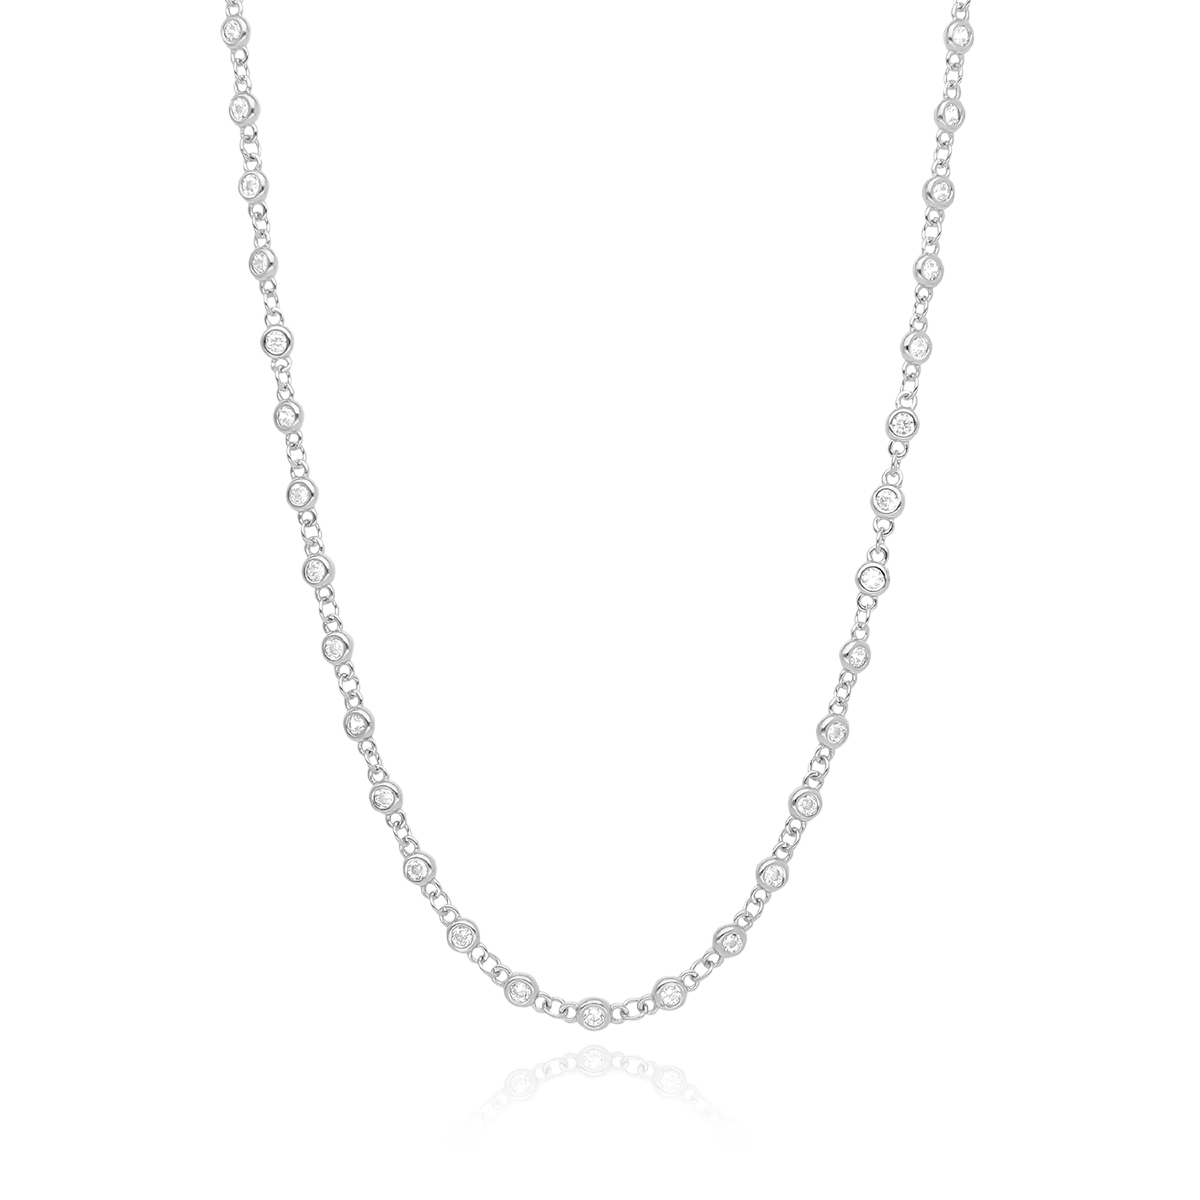 Collana Mabina in argento con zirconi 553365